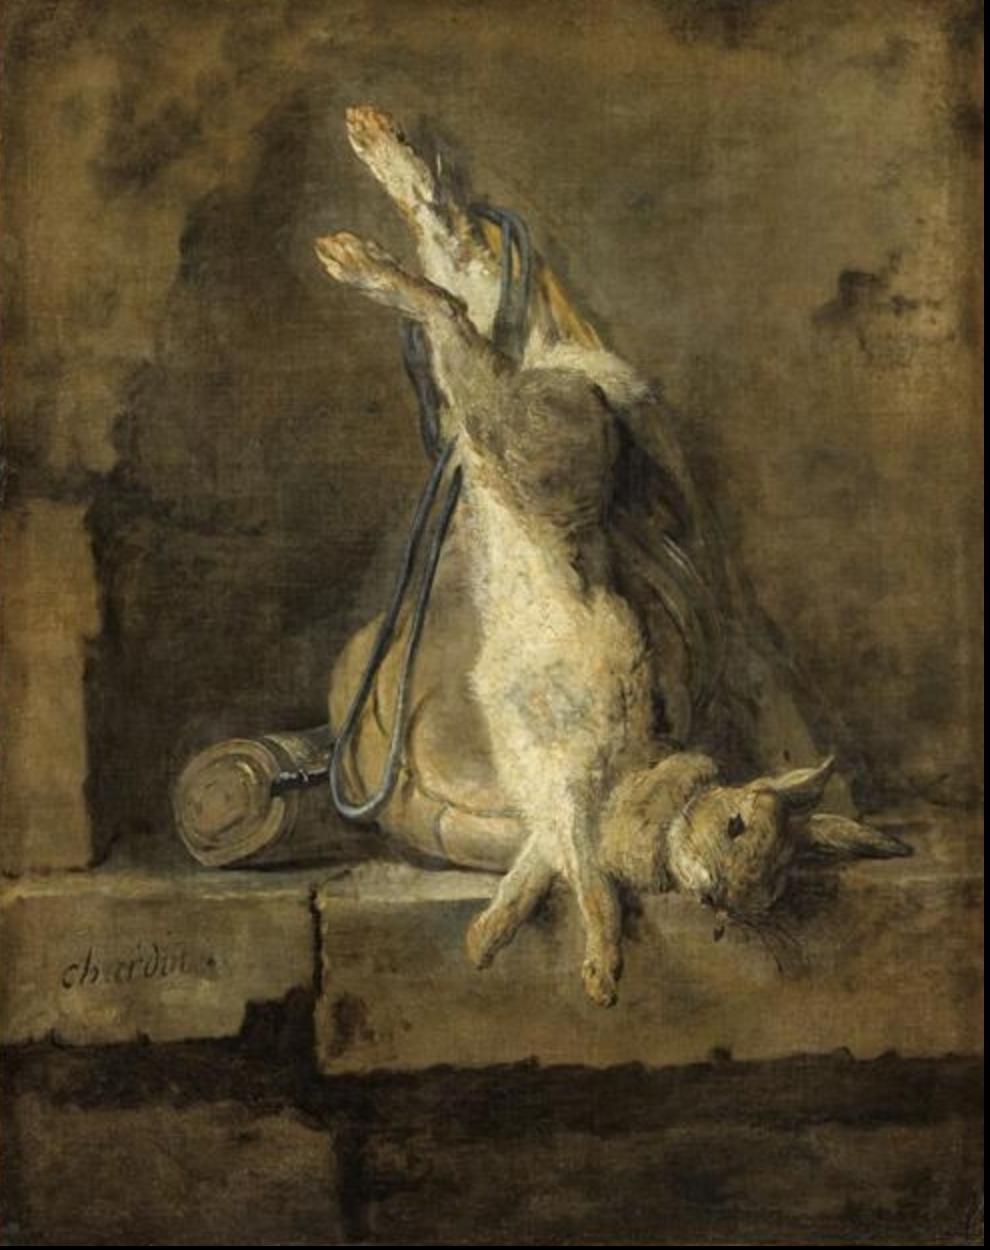 Dead Rabbit and Hunting Gear, Jean-Baptiste-Siméon Chardin